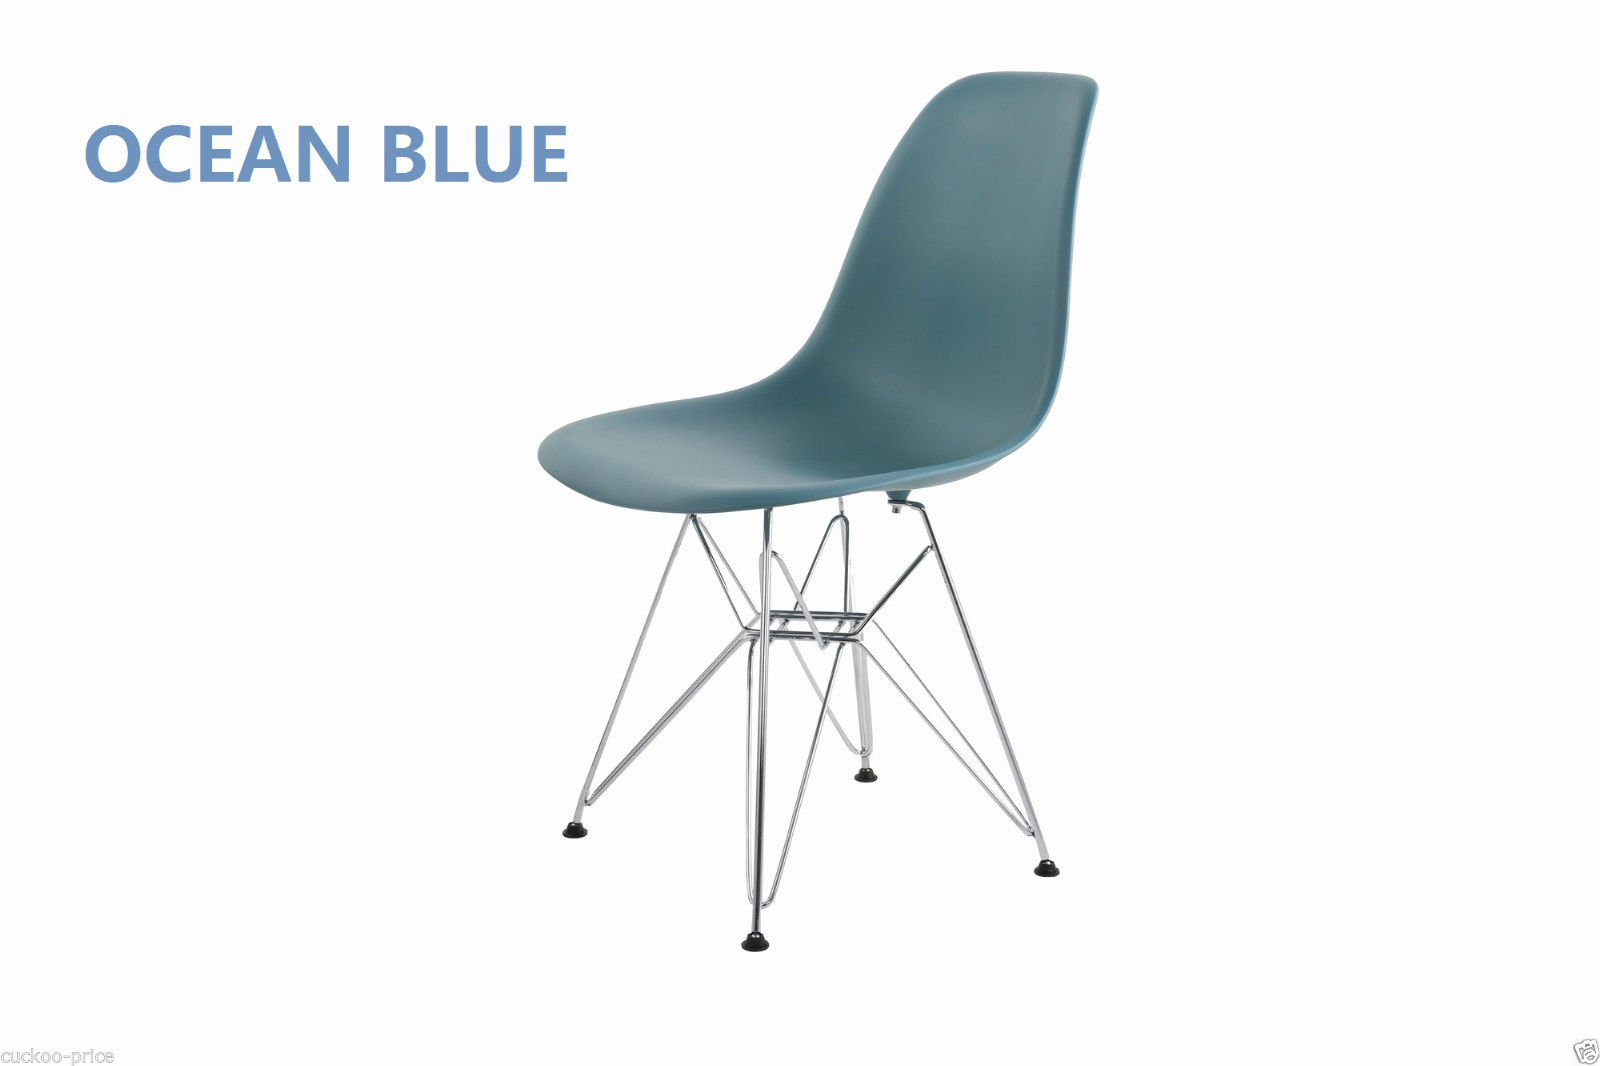 Budget Designer Epsom Designer Ocean Blue Dining Chair Metal Base